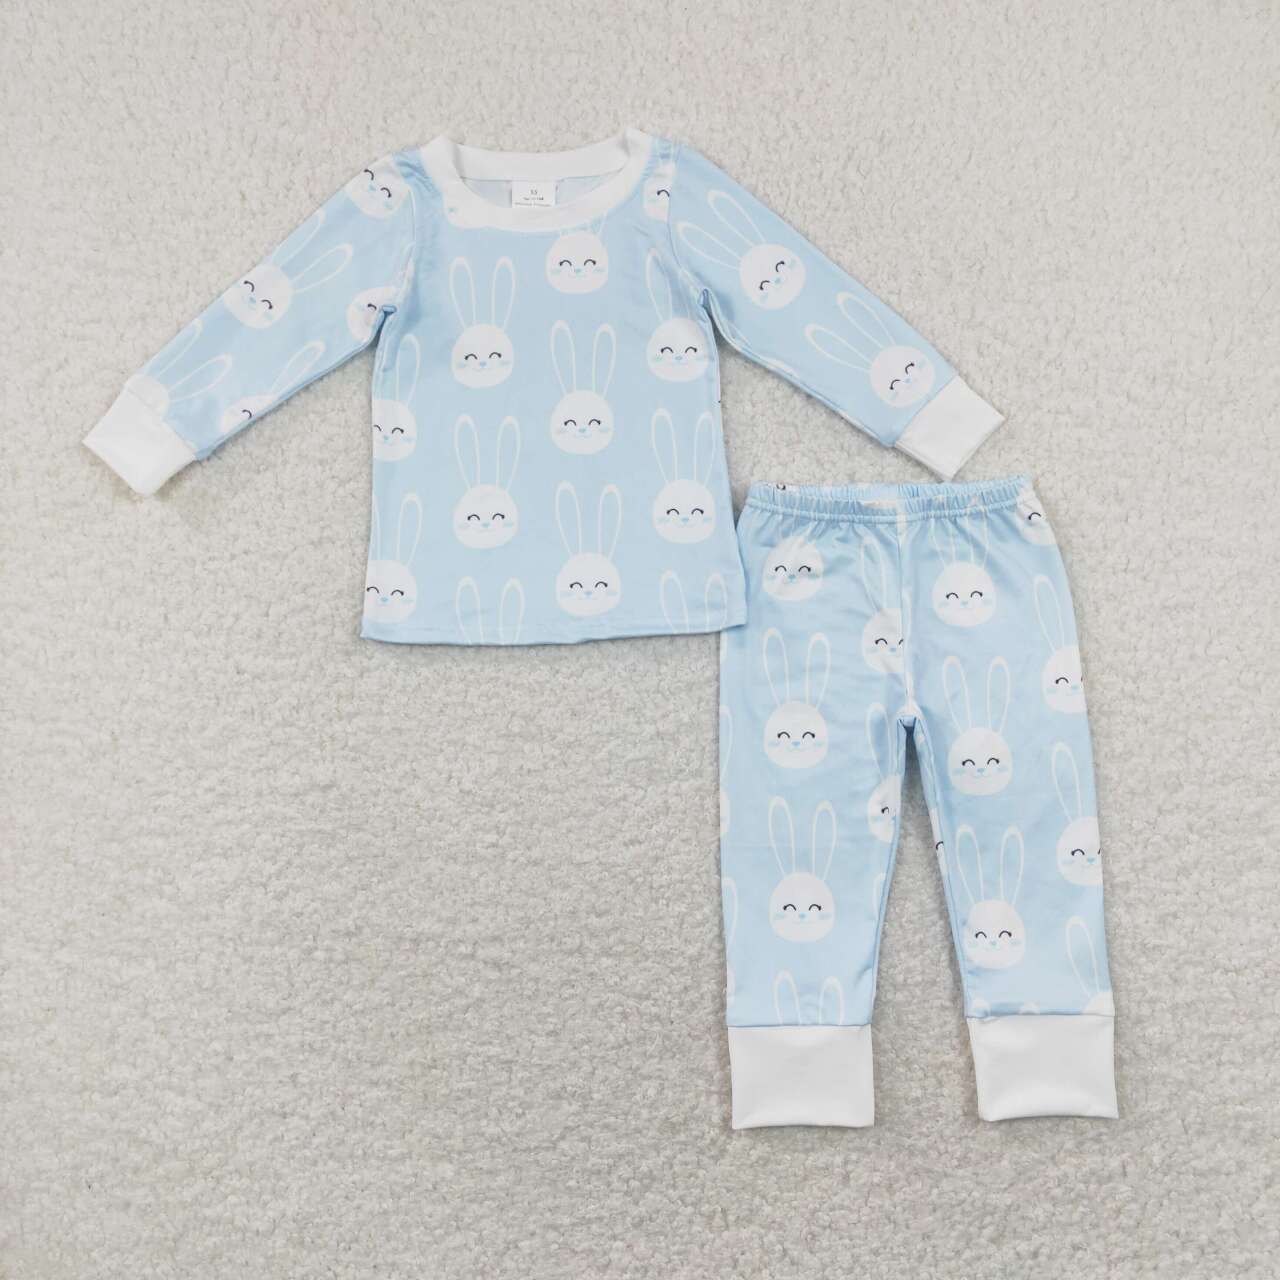 BLP0457 Blue Bunny Print Boys Easter Pajamas Clothes Set